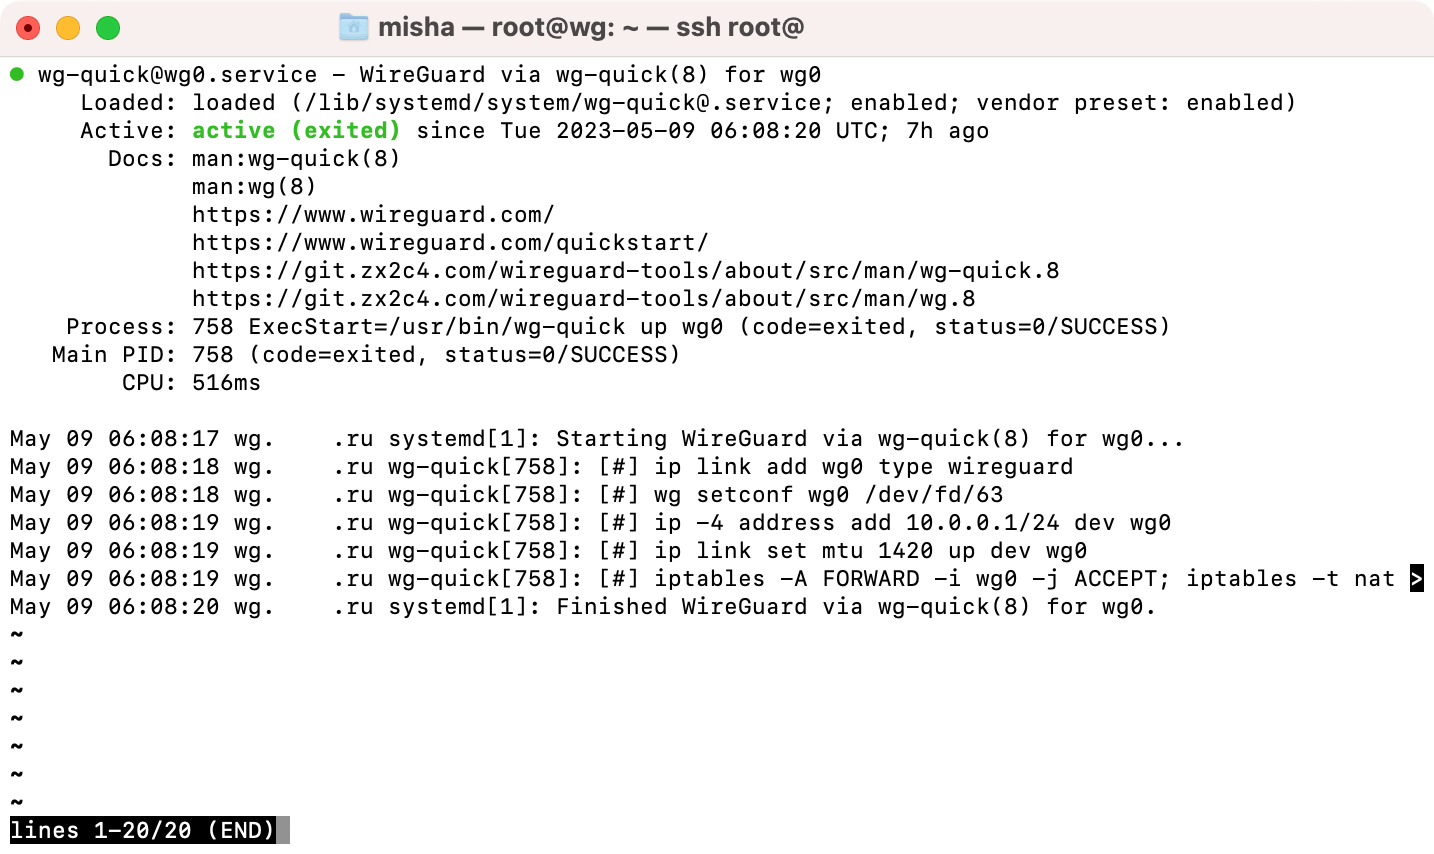 Wireguard Active Exited in Ubuntu 22.04